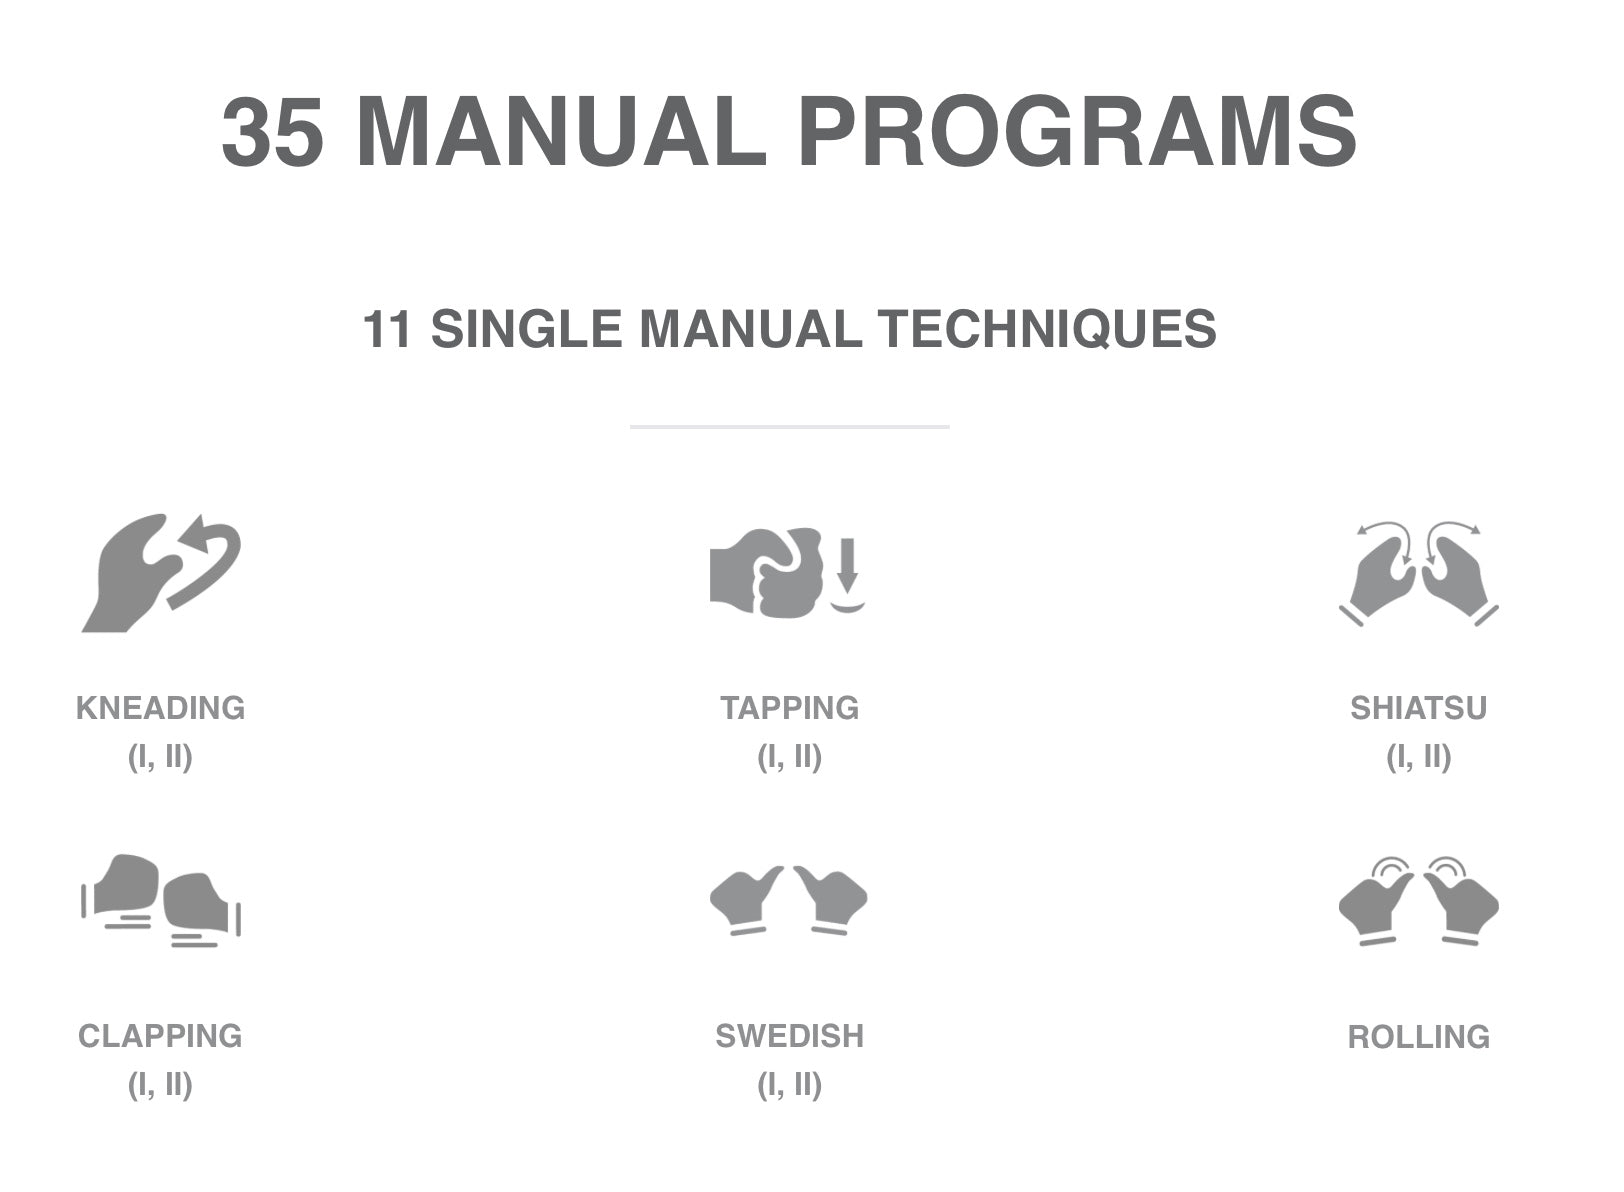 35 Manual Programs